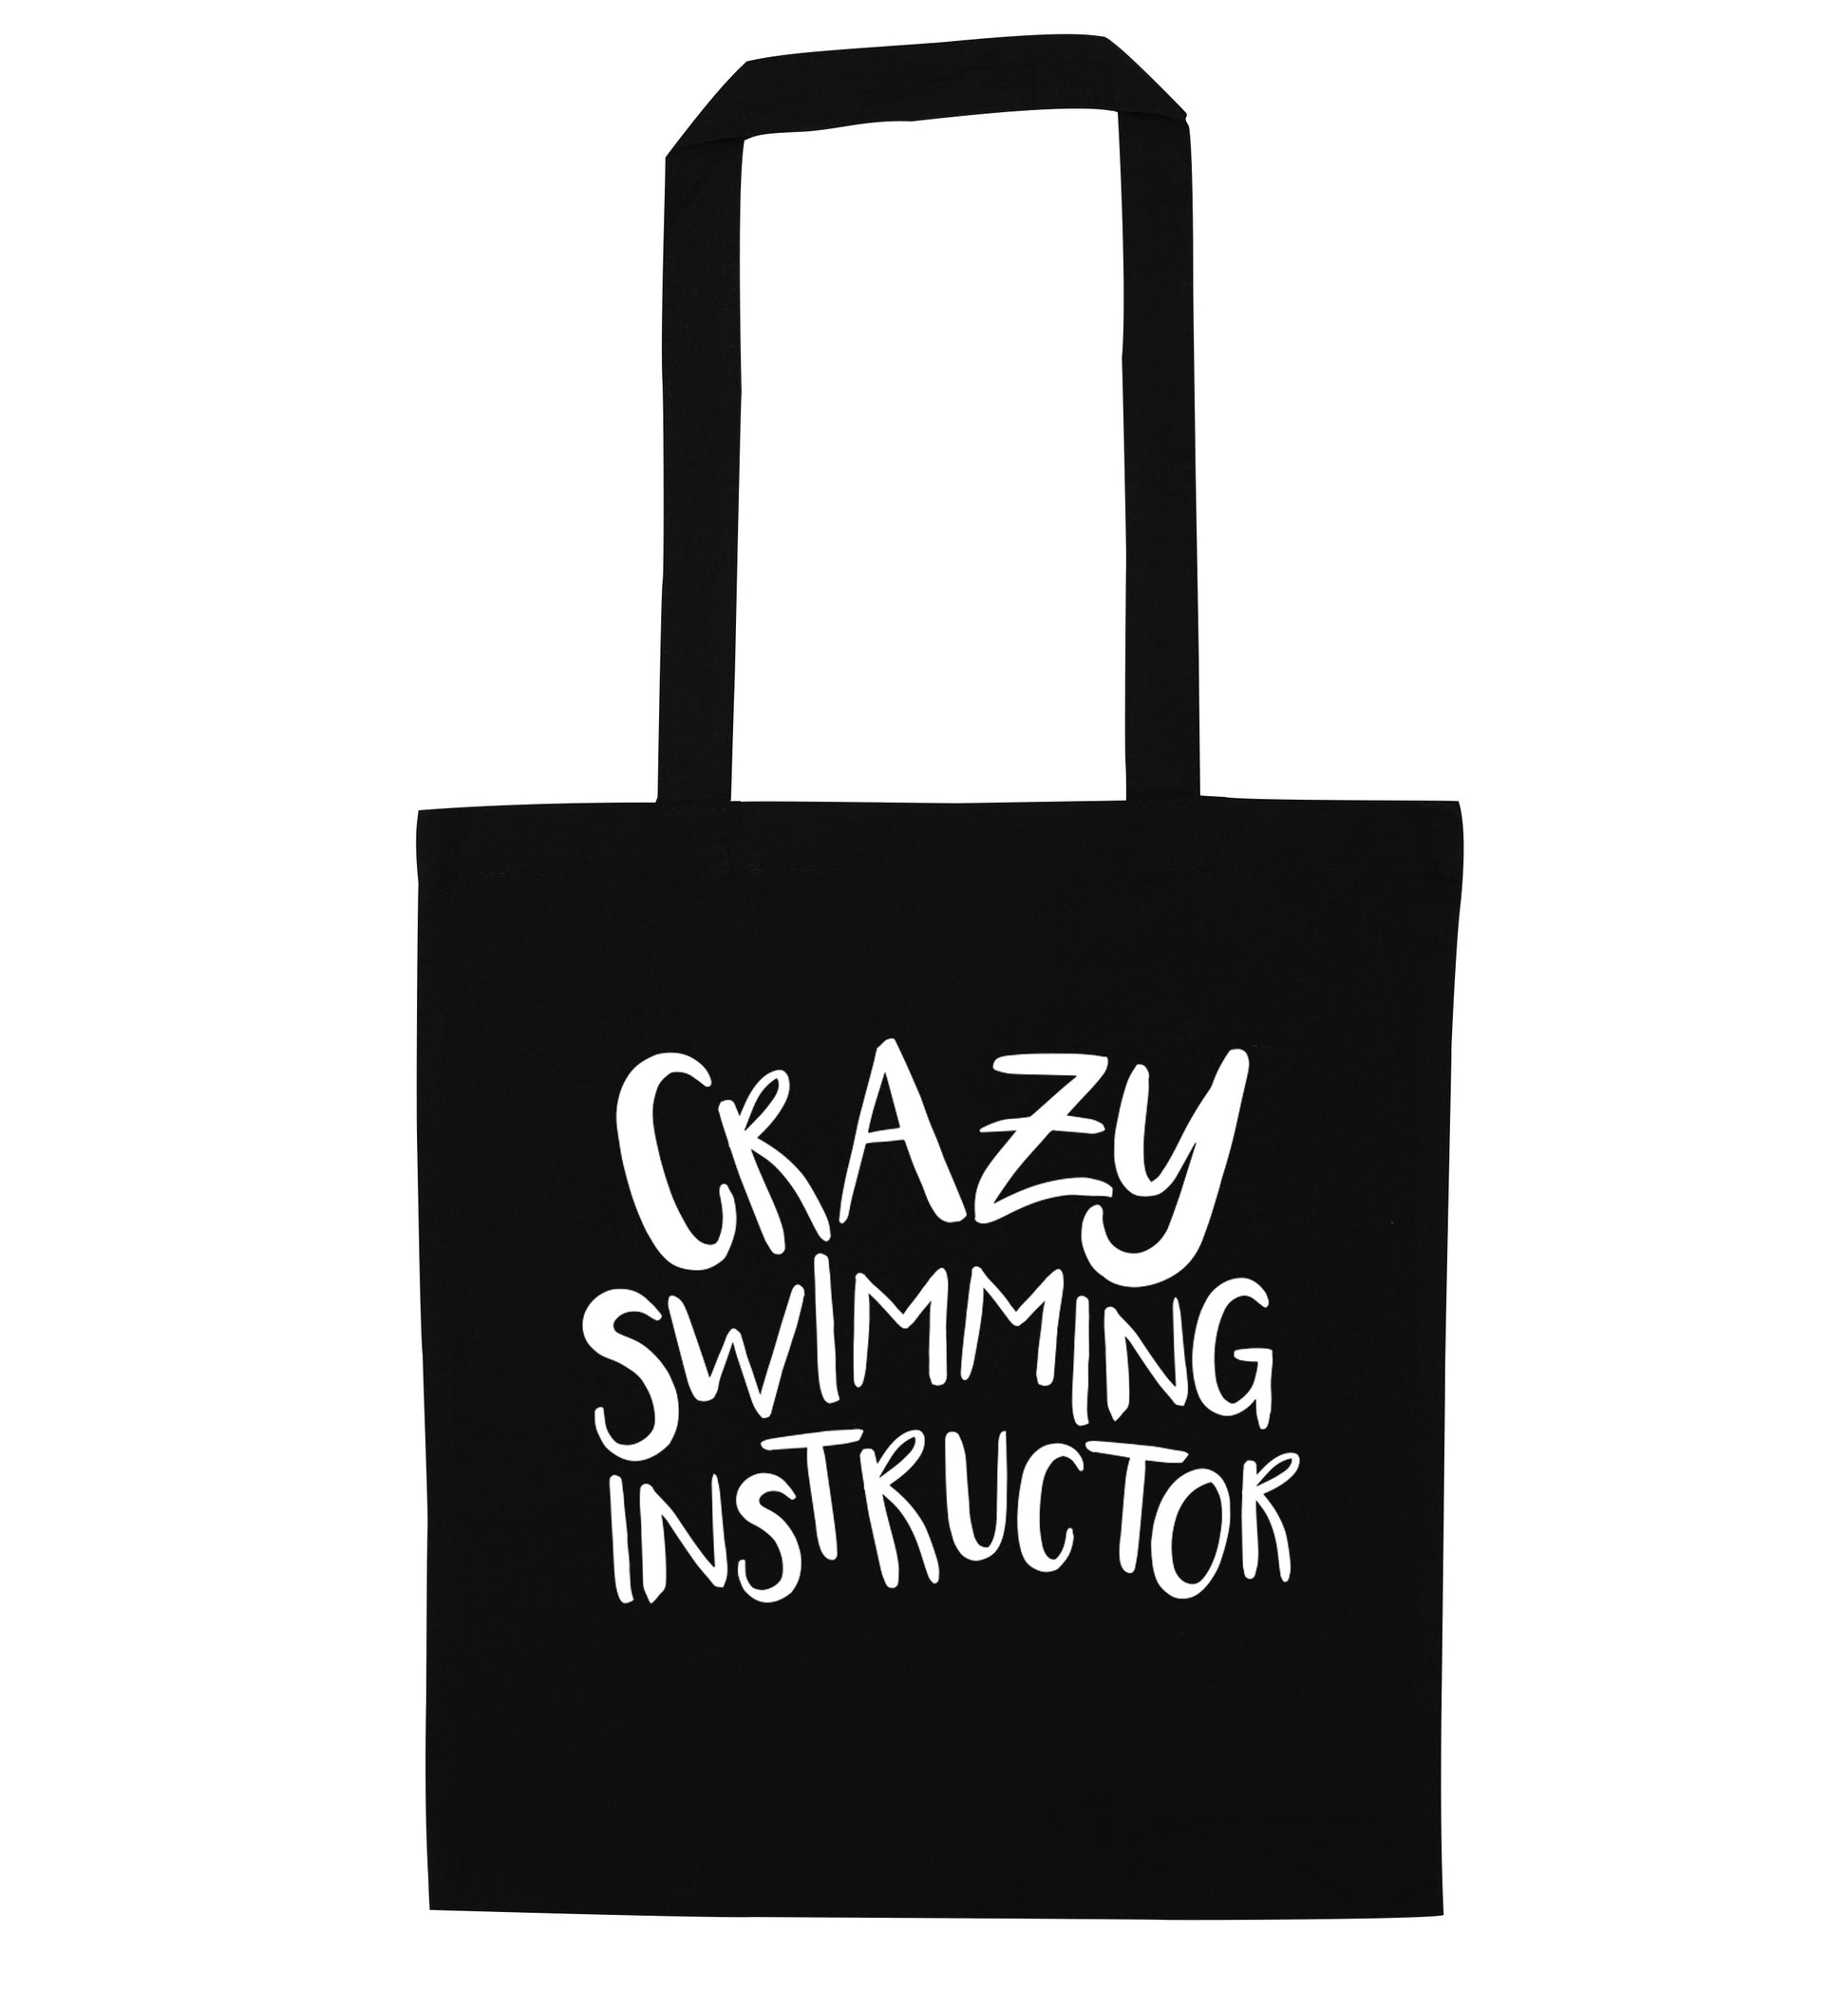 Crazy swimming instructor black tote bag